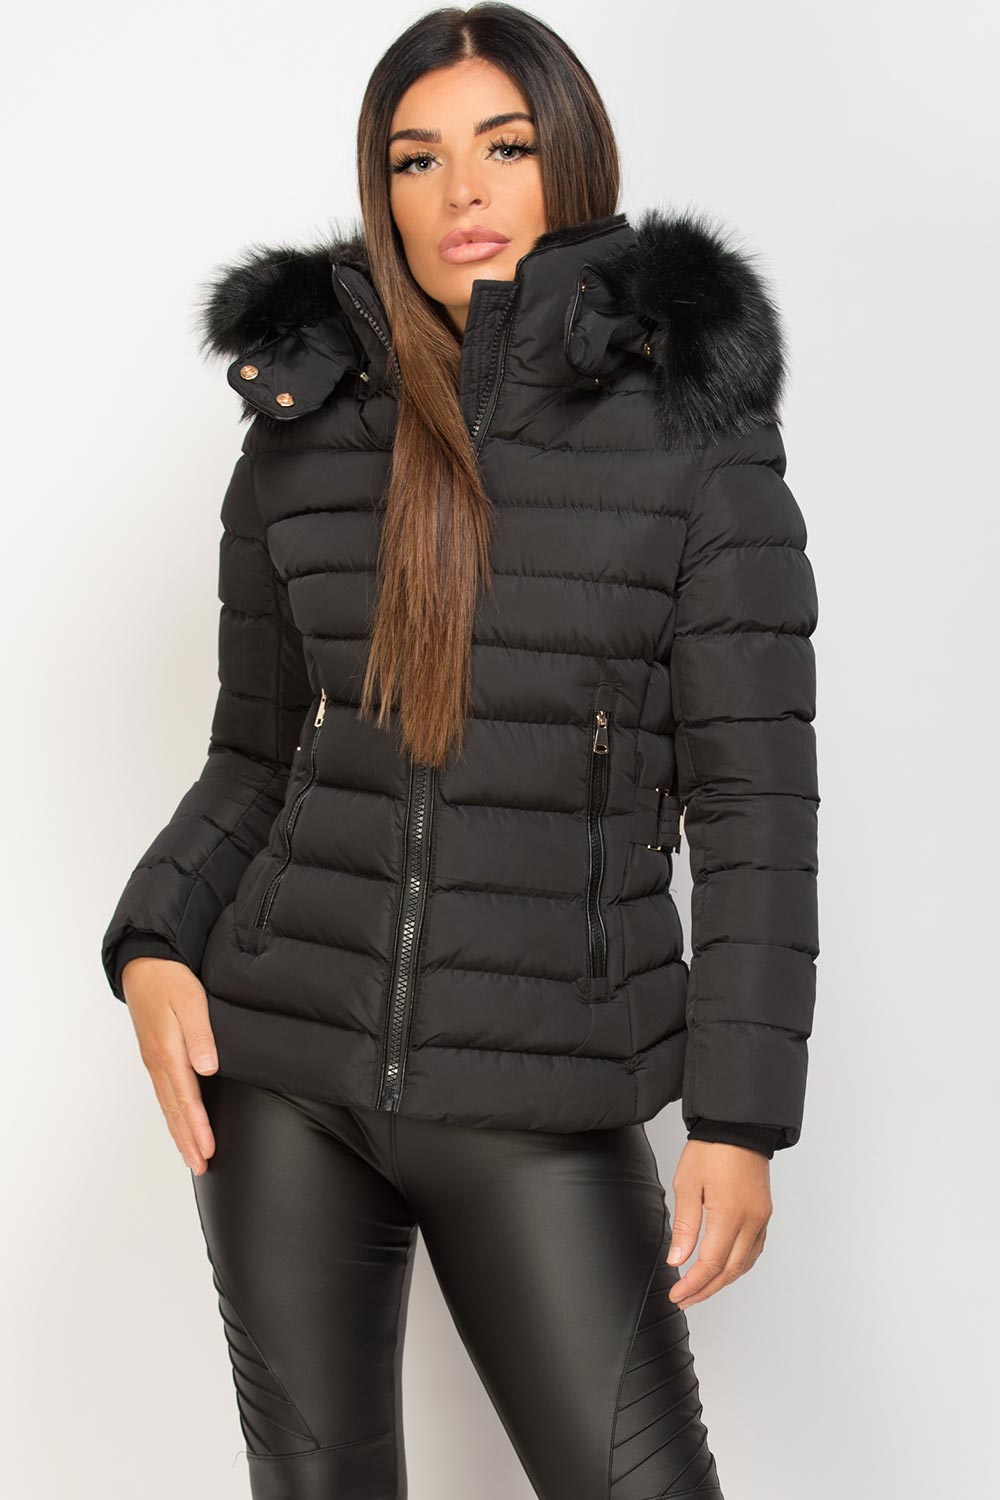 black puffer jacket winter coat womens 